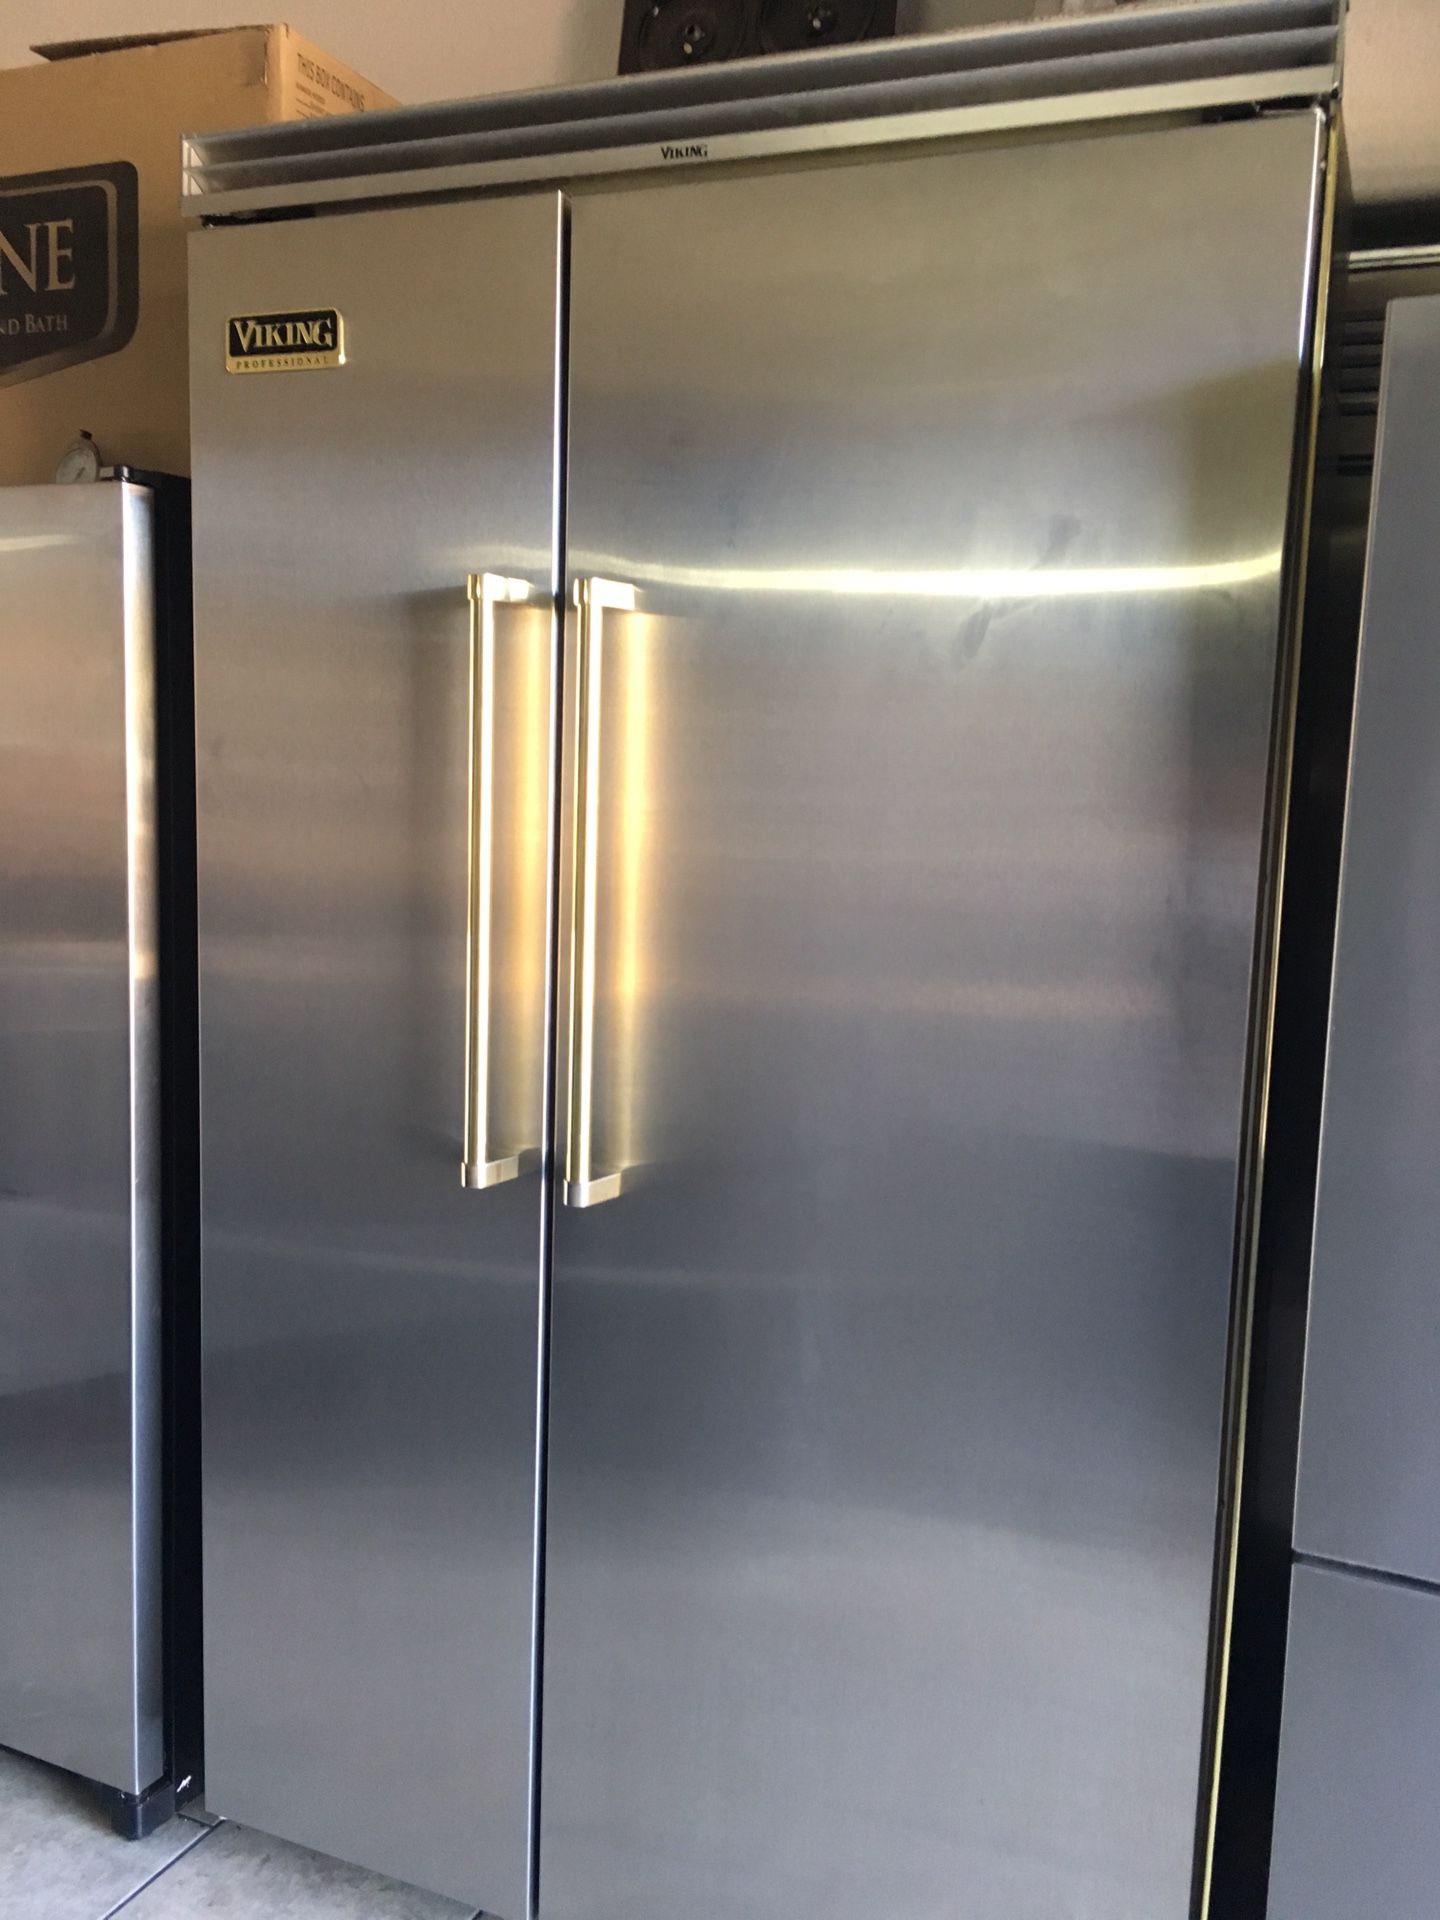 Viking refrigerator built in 48”W